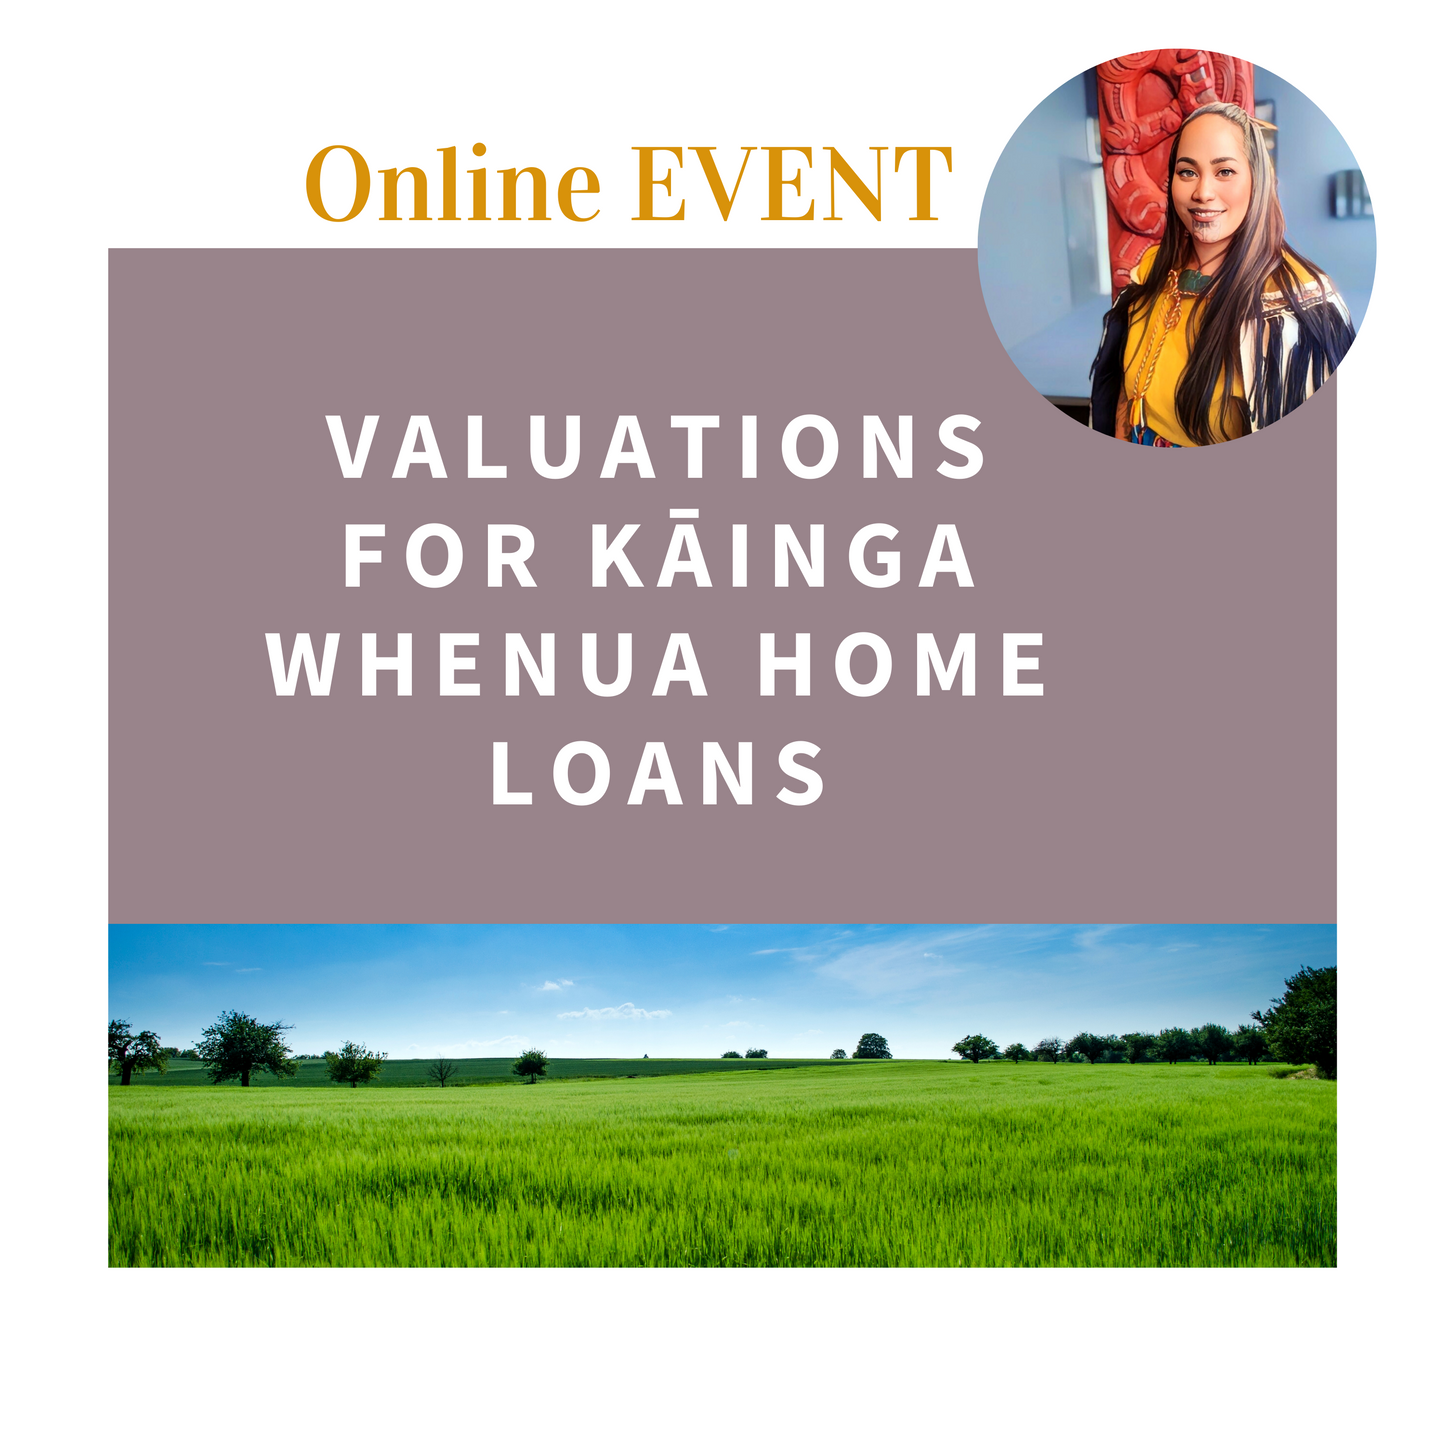 Prepare for Kāinga Whenua Valuations